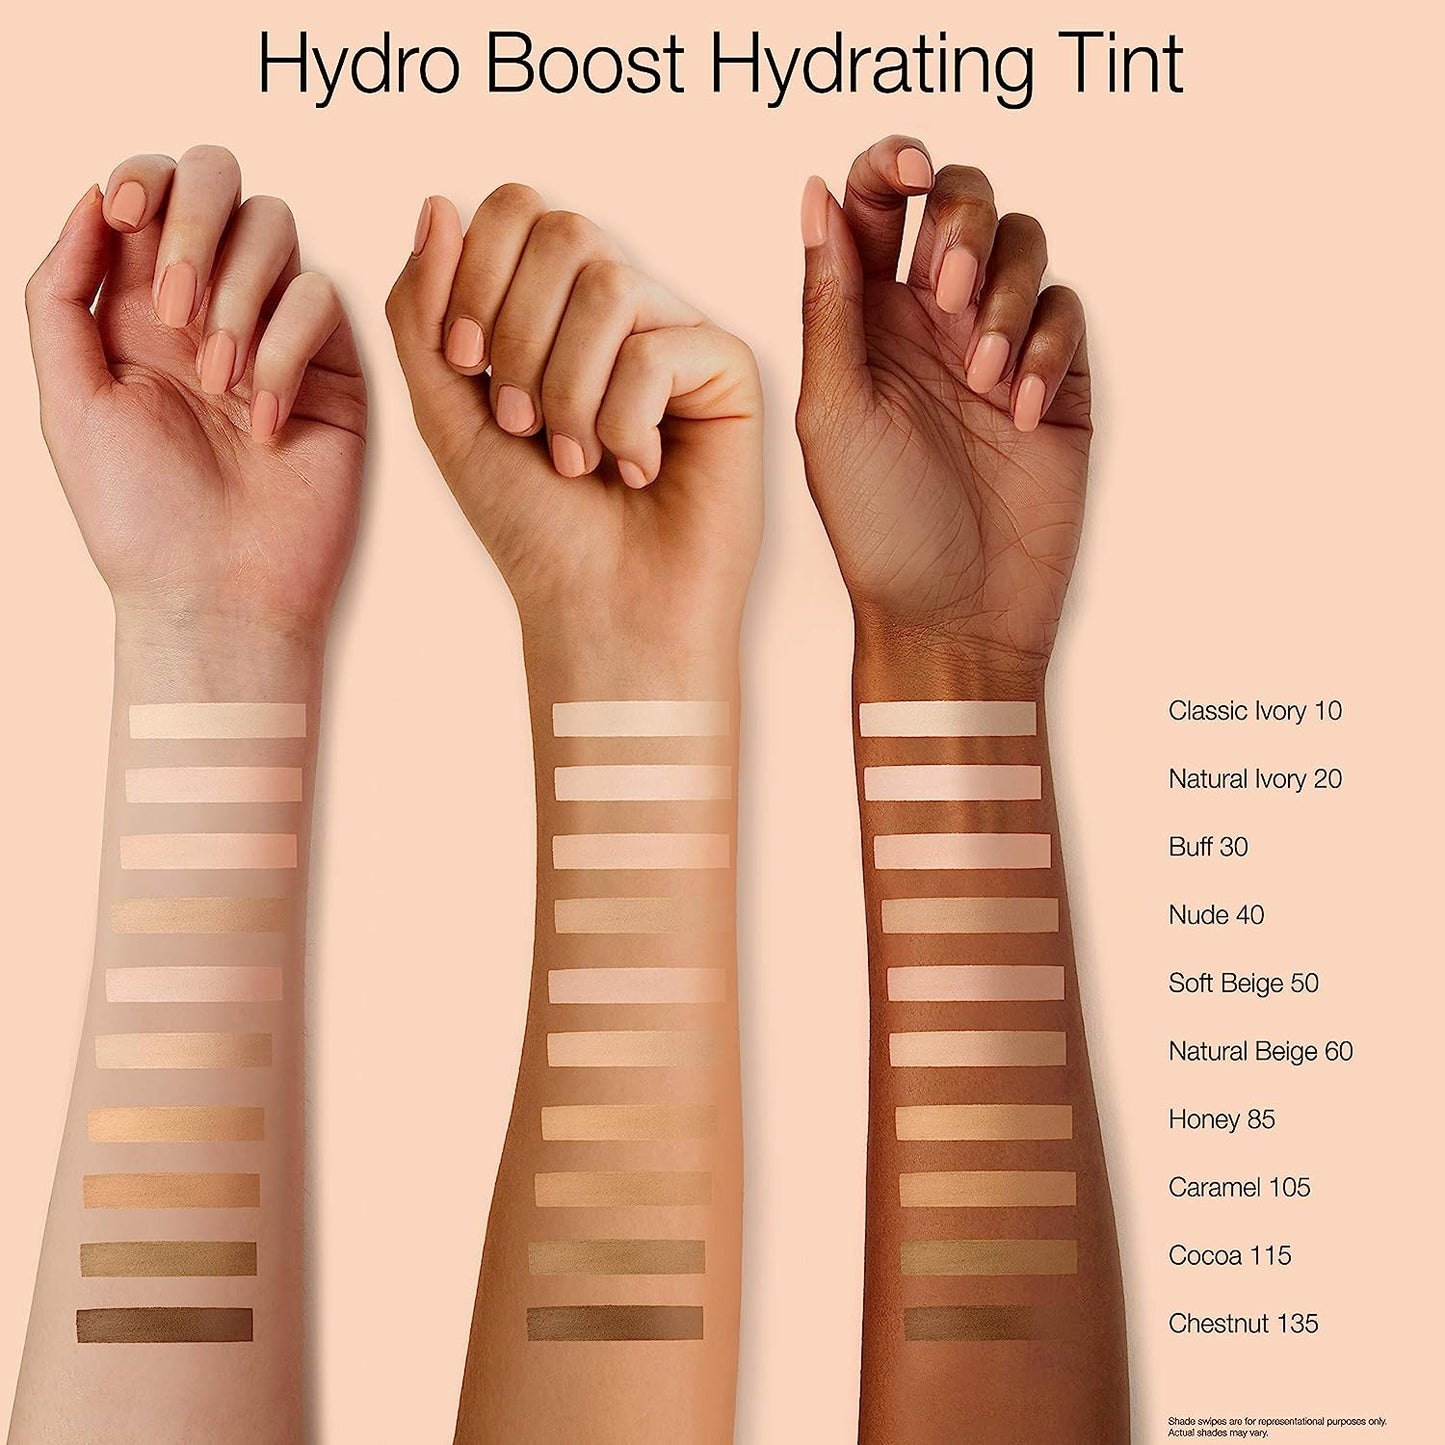 Neutrogena Hydro Boost Hydrating Tint Hyaluronic Acid Moisturizes & Plumps Skin (Buff 30) - 30ml / 1.0 fl oz